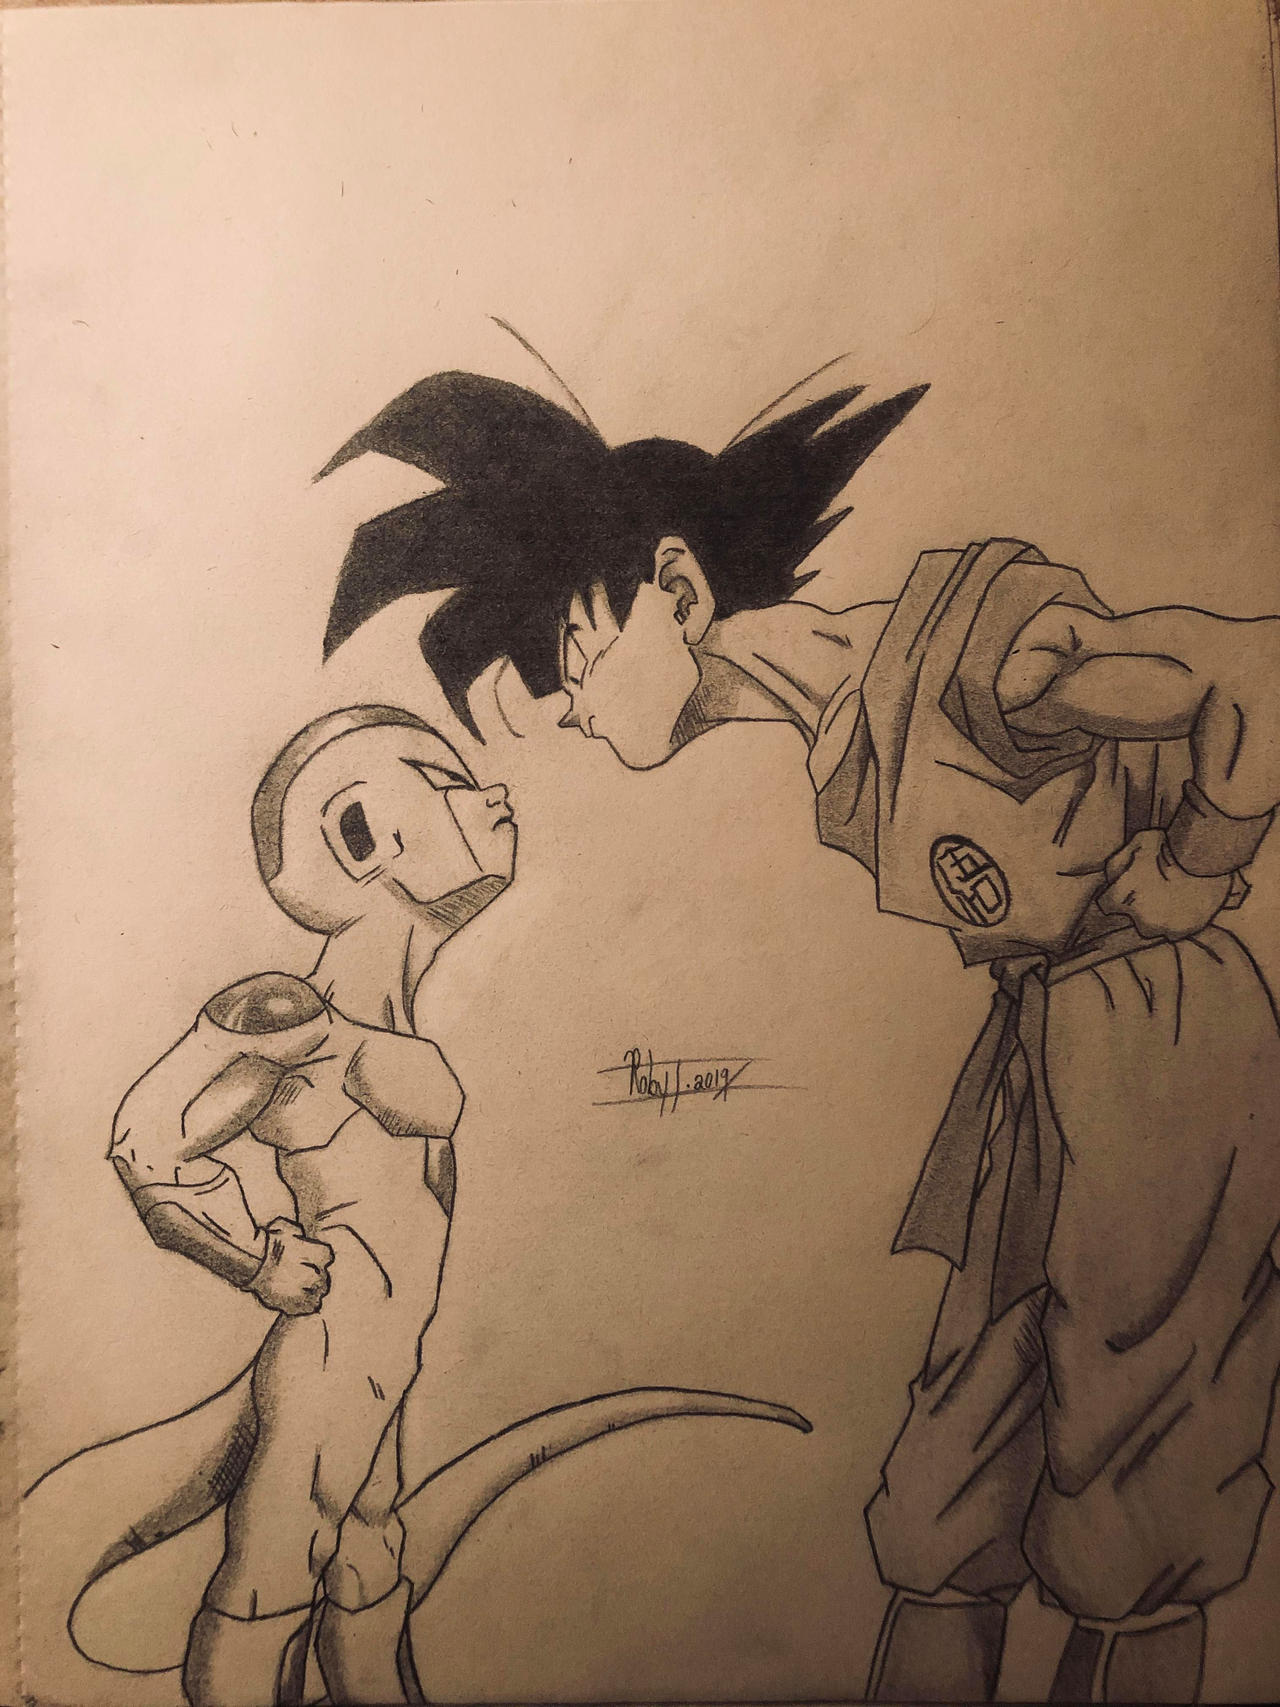 Goku (Dragonball Manga Panel) by RobTurp1230 on DeviantArt